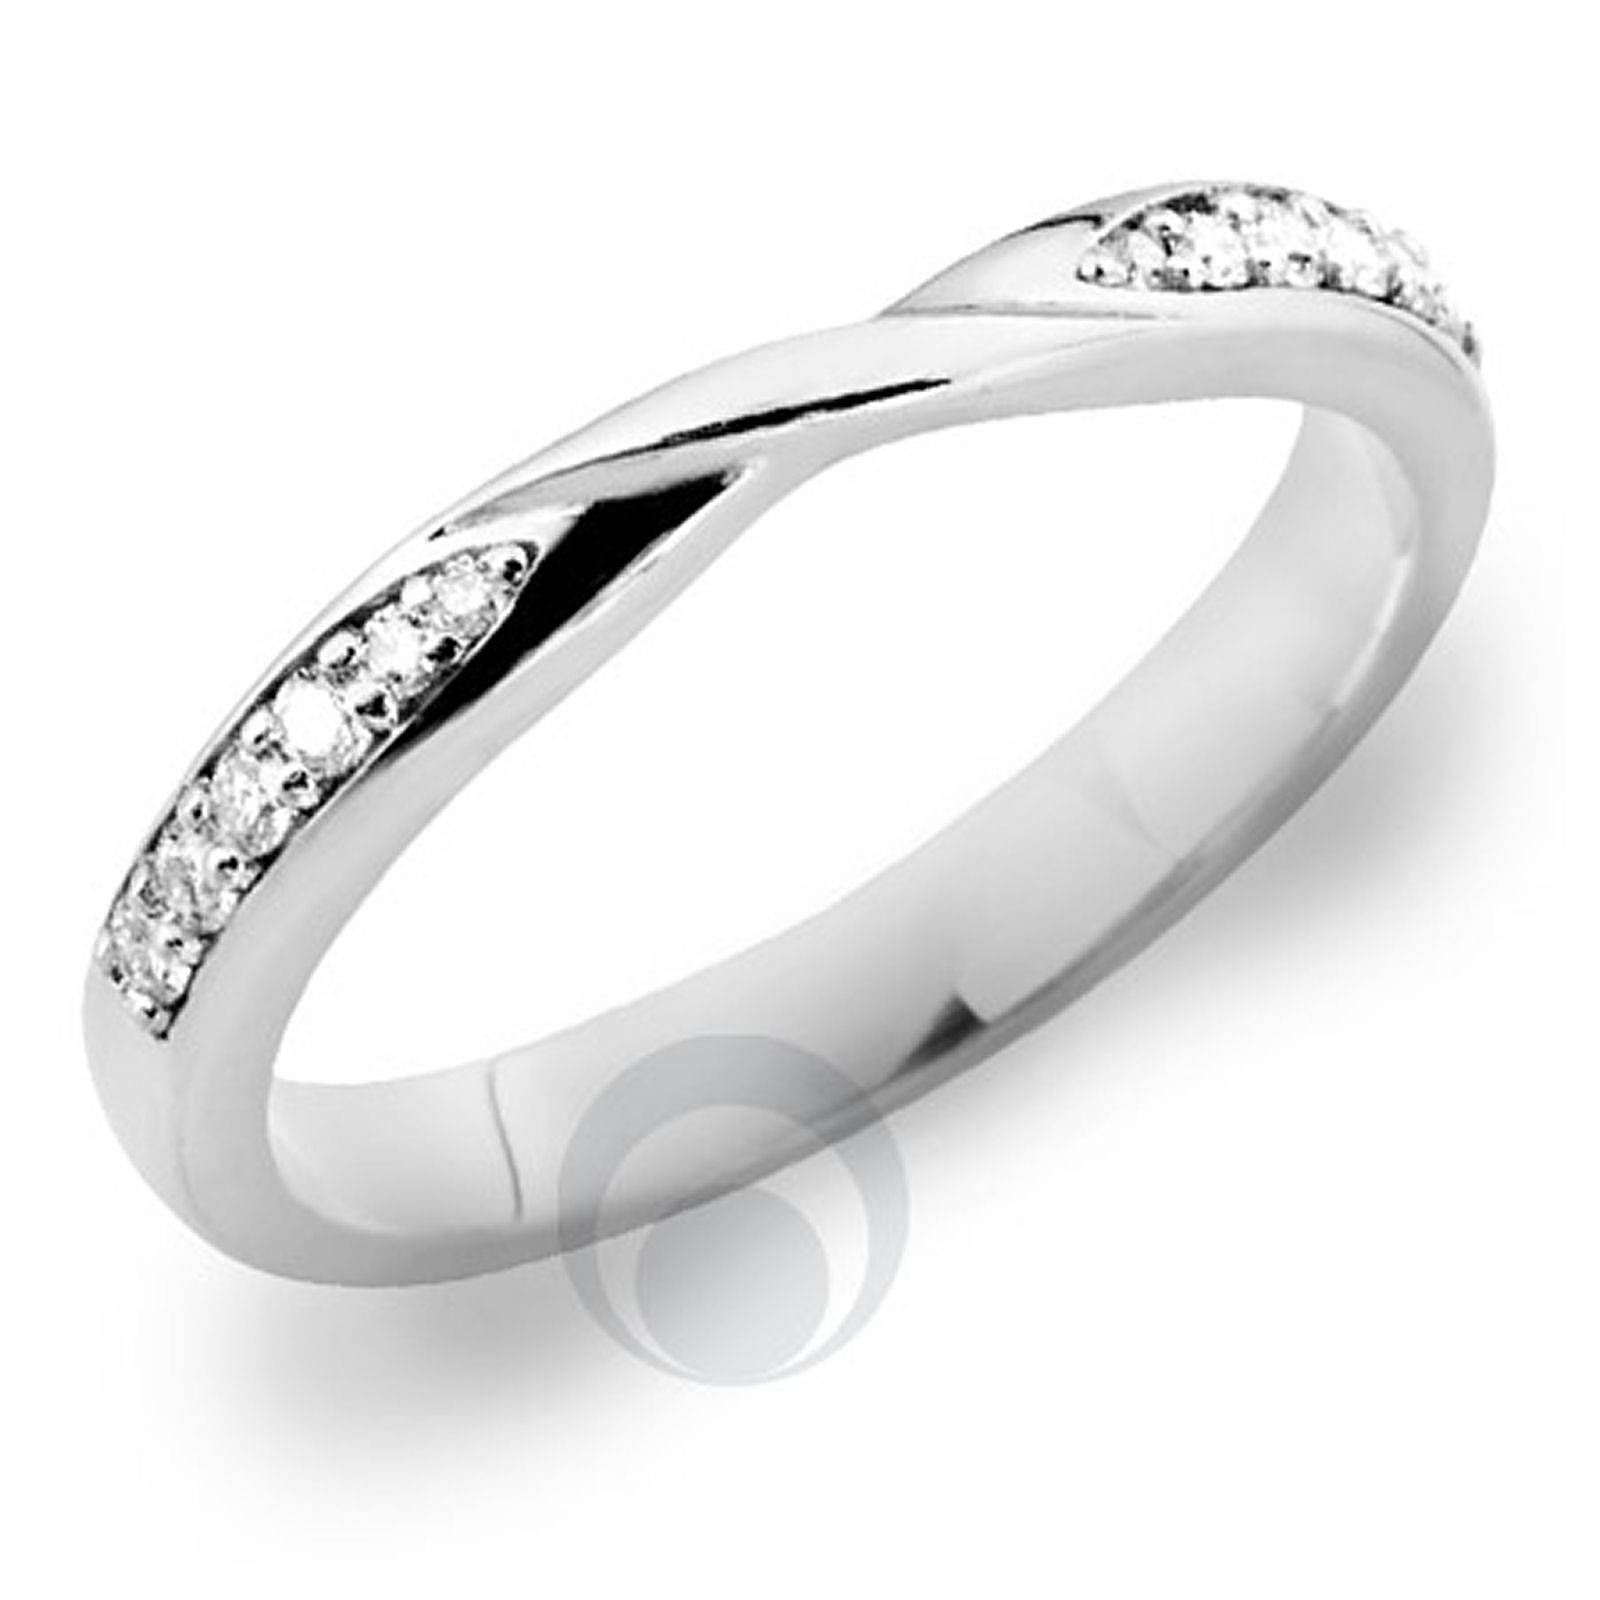 Diamond Platinum Wedding Ring For Solitaire Engagement Ring For Wedding Rings To Go With Solitaire Engagement Rings (View 15 of 15)